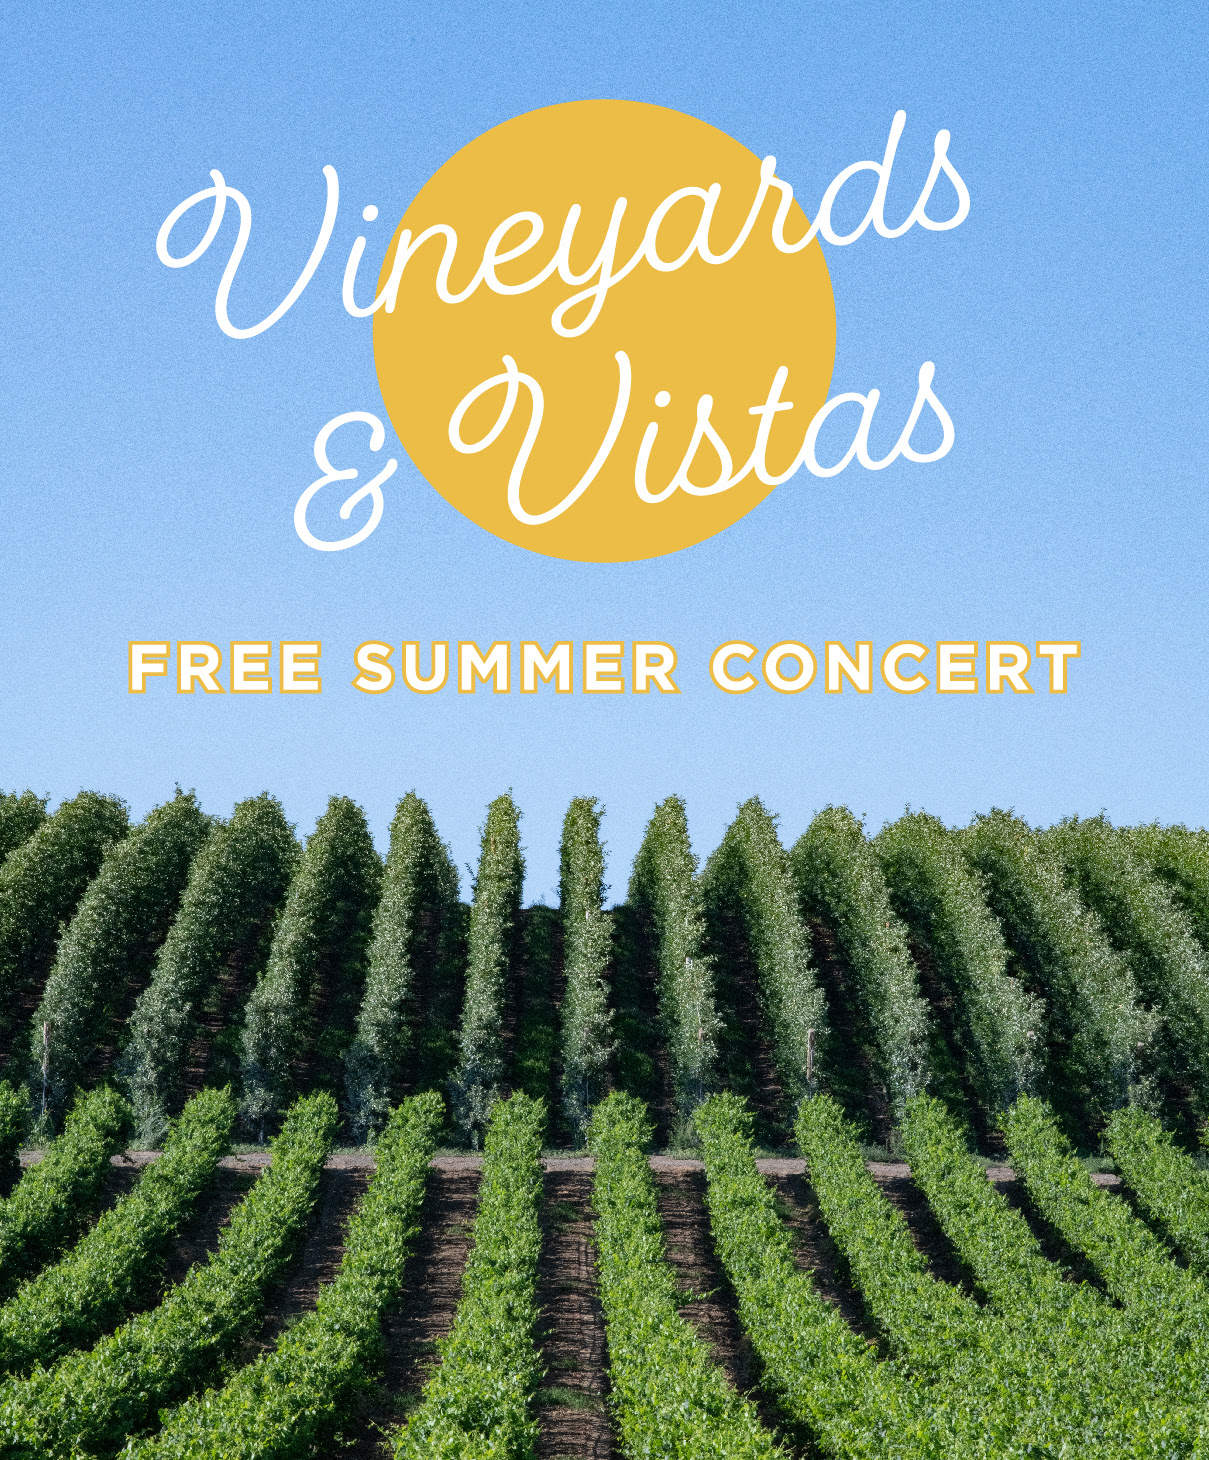 Vineyards & Vistas FREE Summer Concert